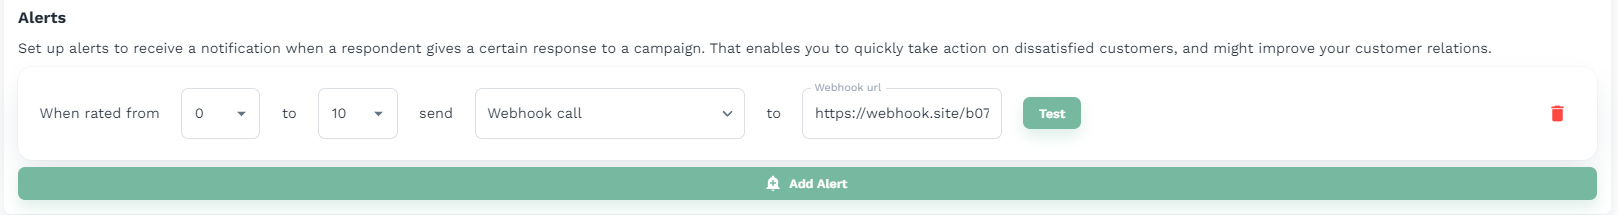 Webhook alert